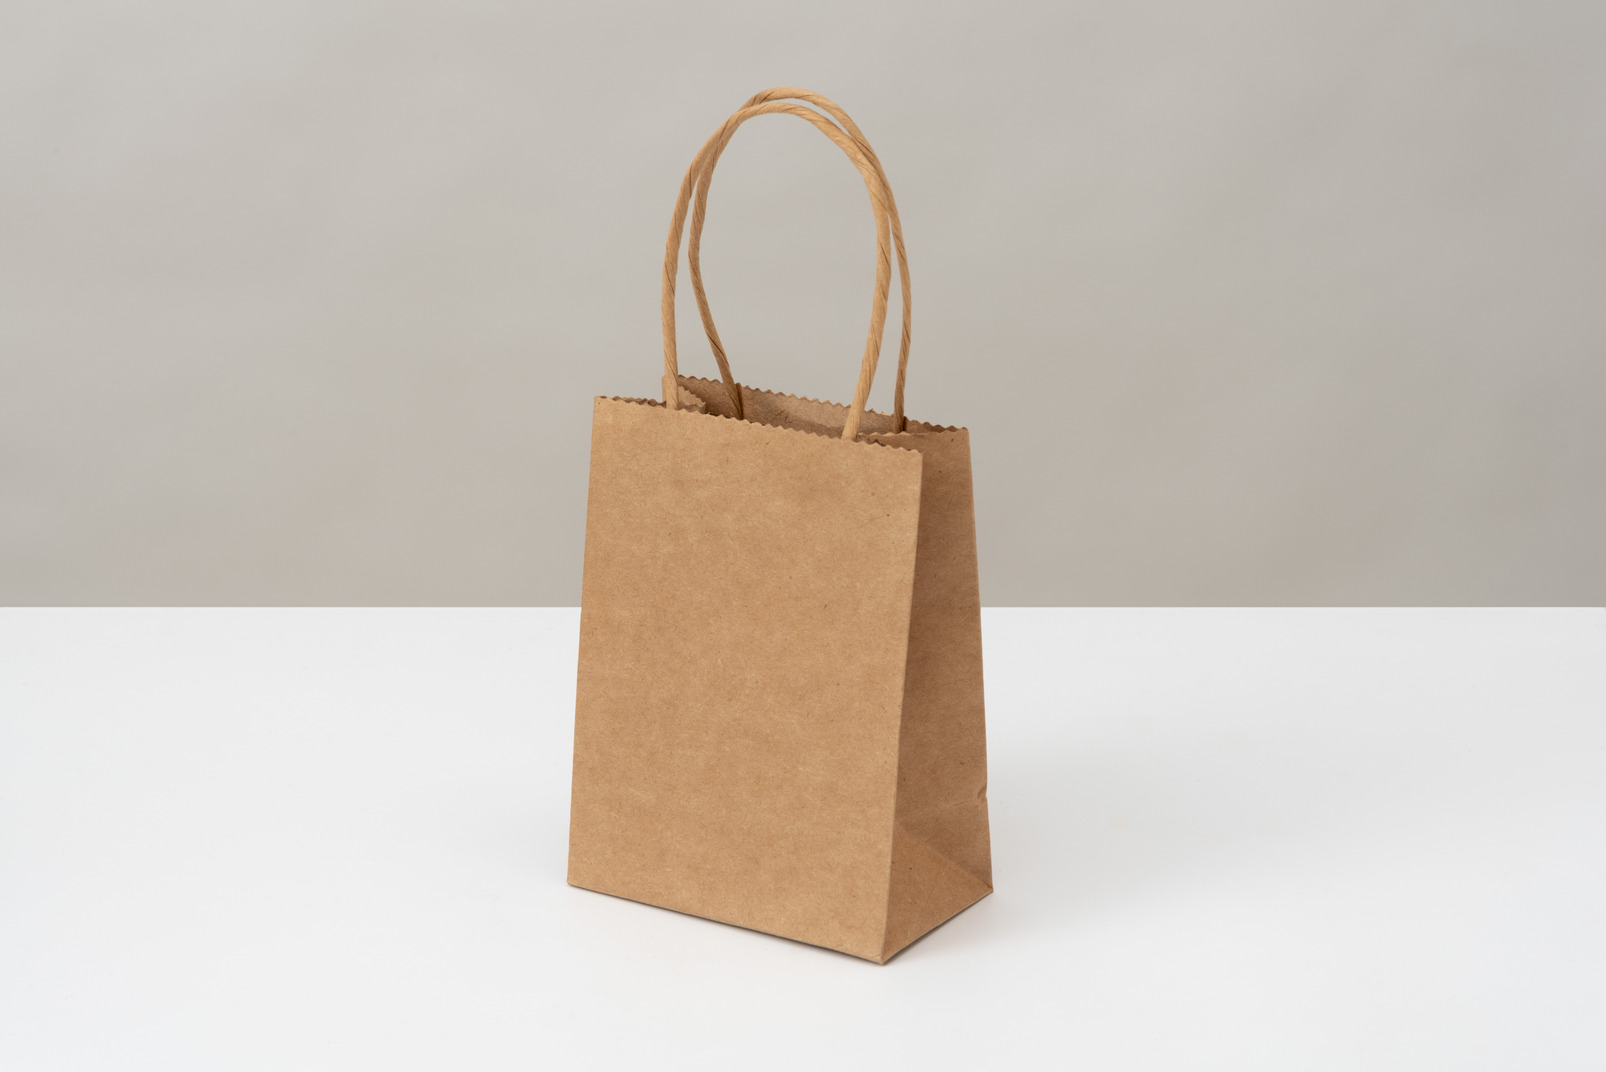 Kraft paper bag ready for your design